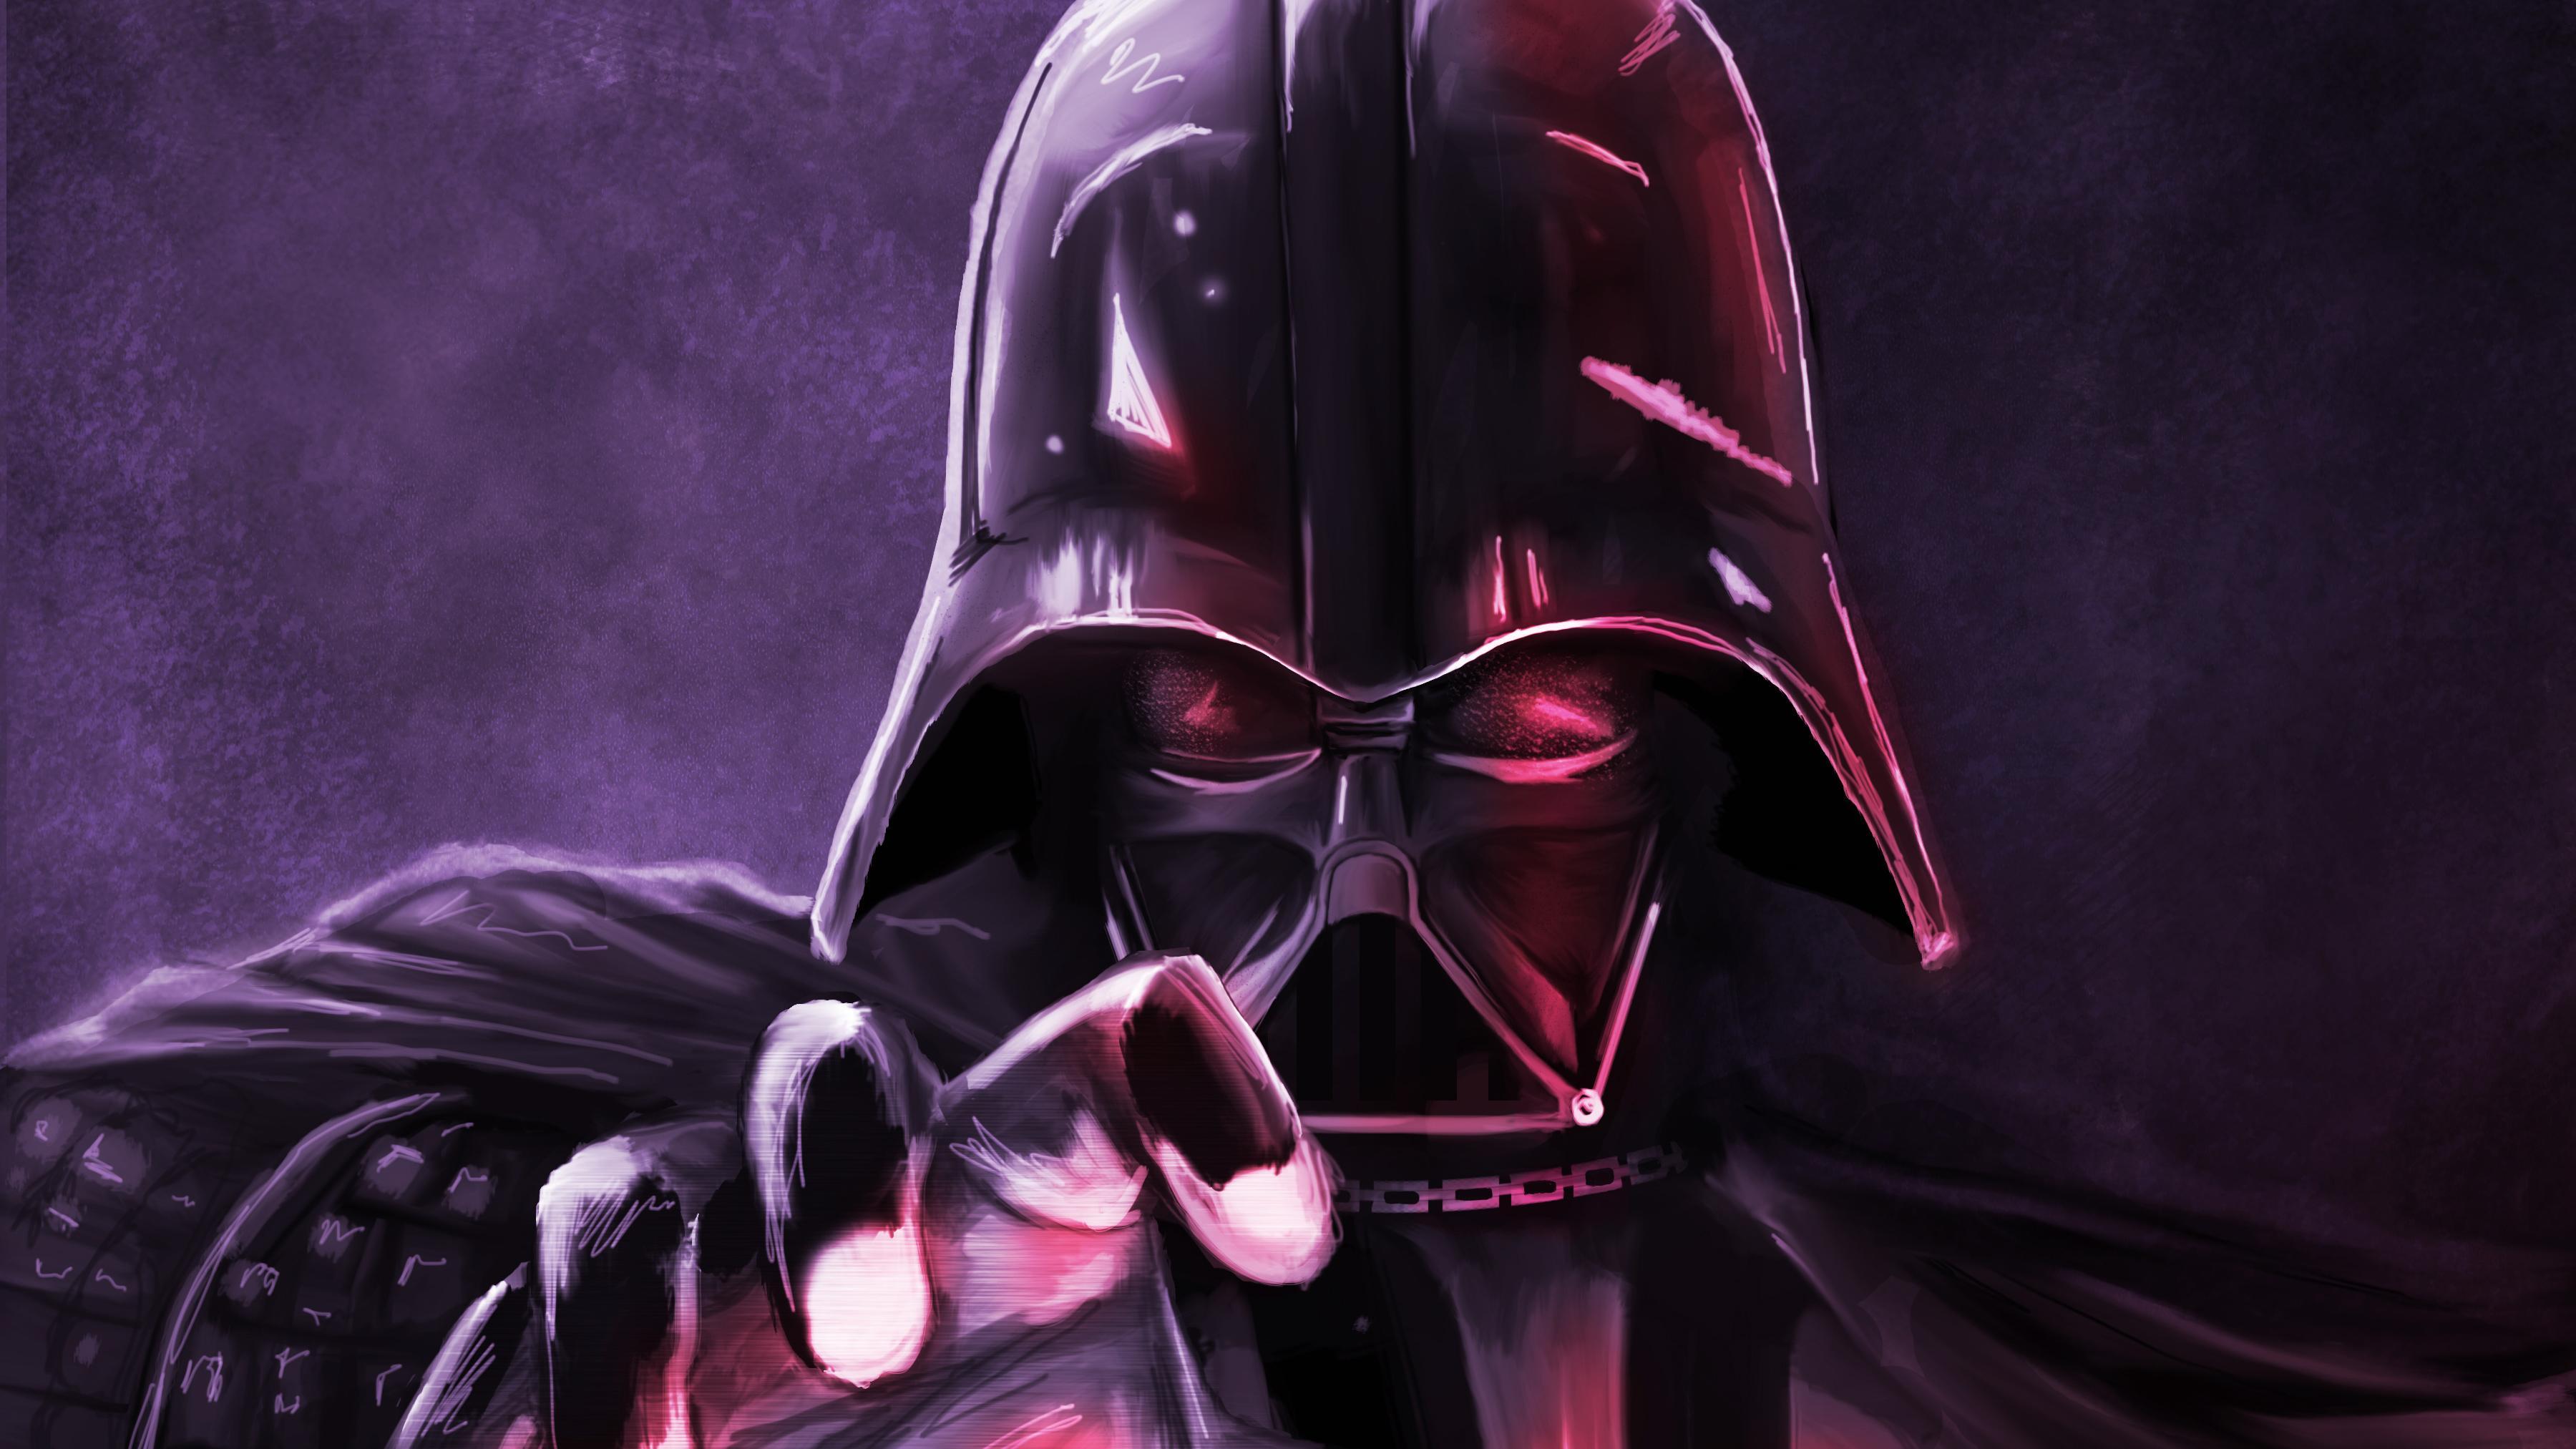 Darth Vader Star Wars Art Wallpapers - Wallpaper Cave